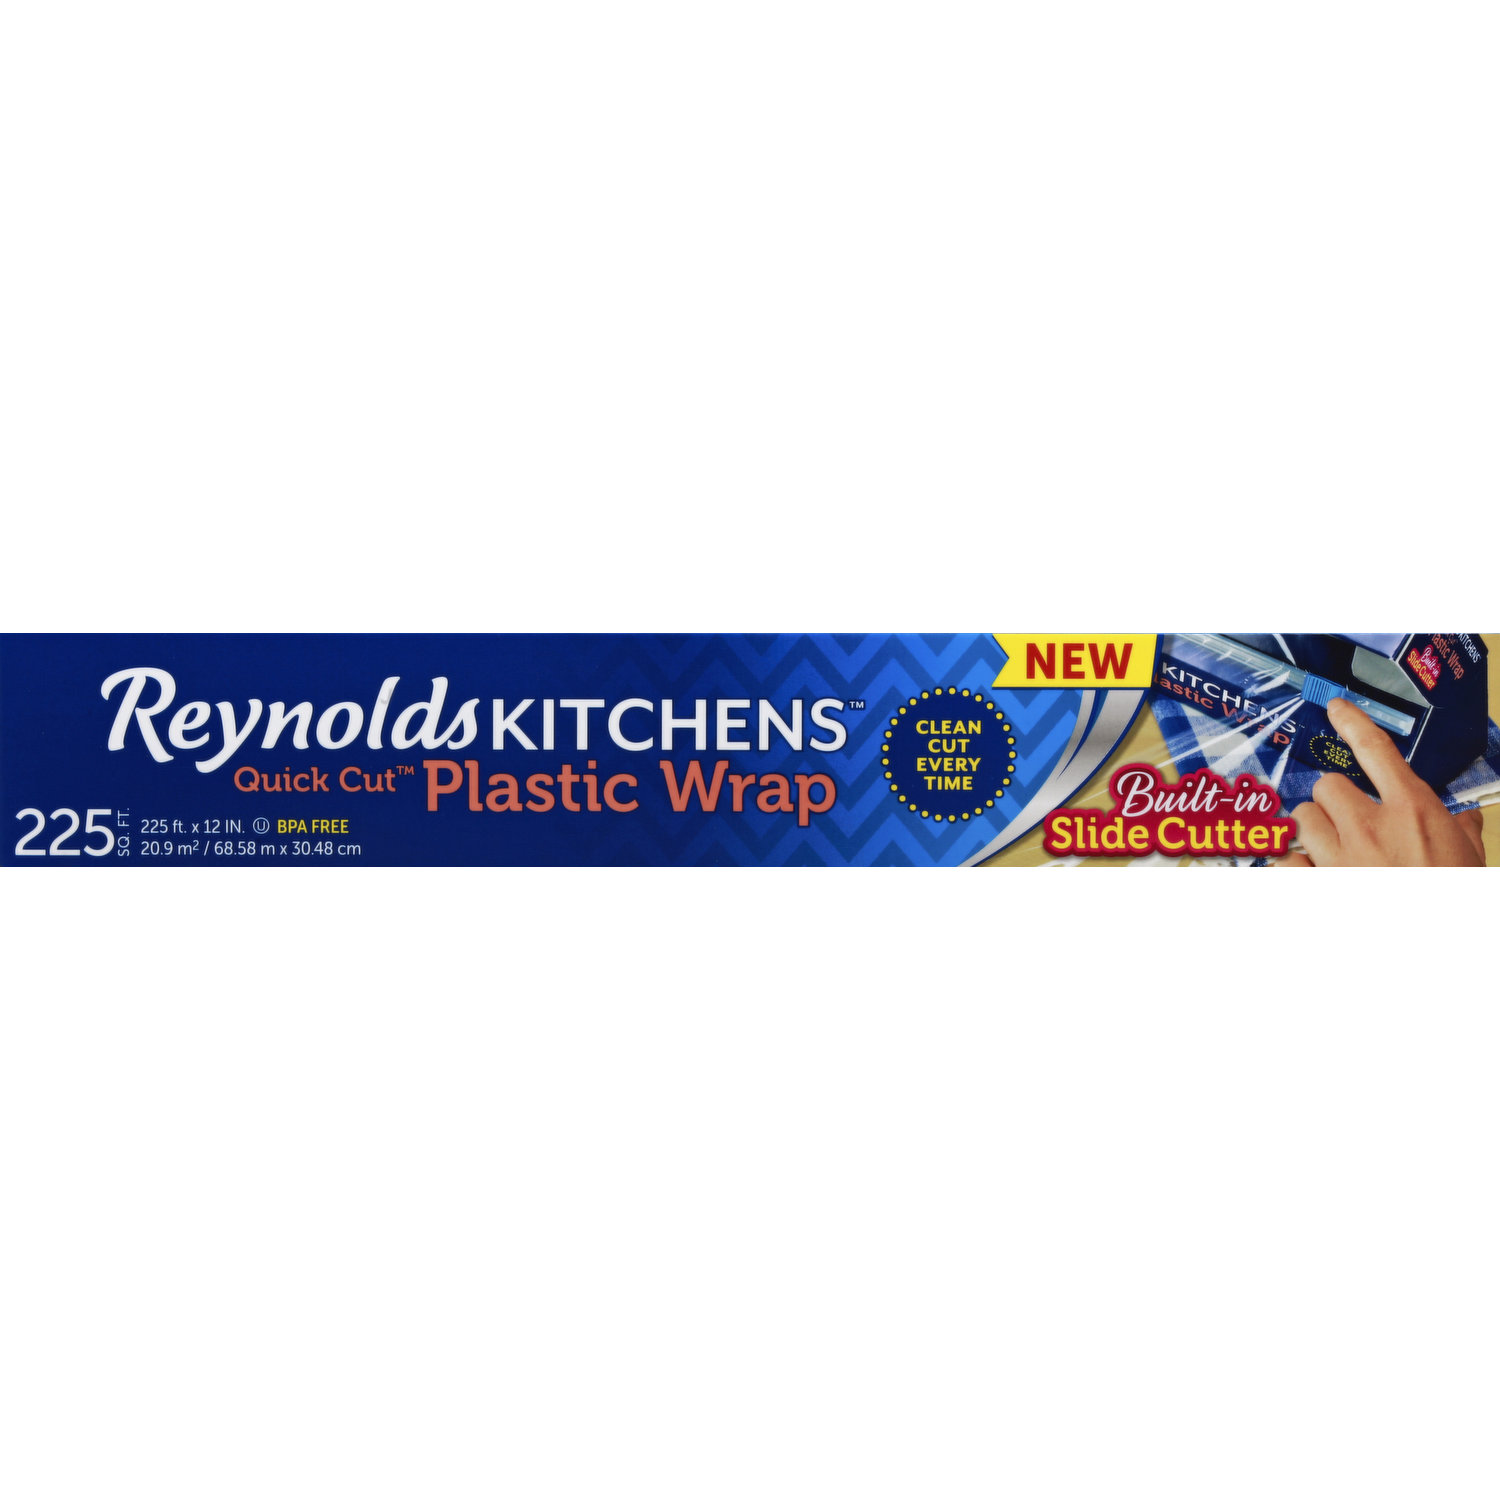  Reynolds Kitchens Quick Cut Plastic Wrap, 225 Square